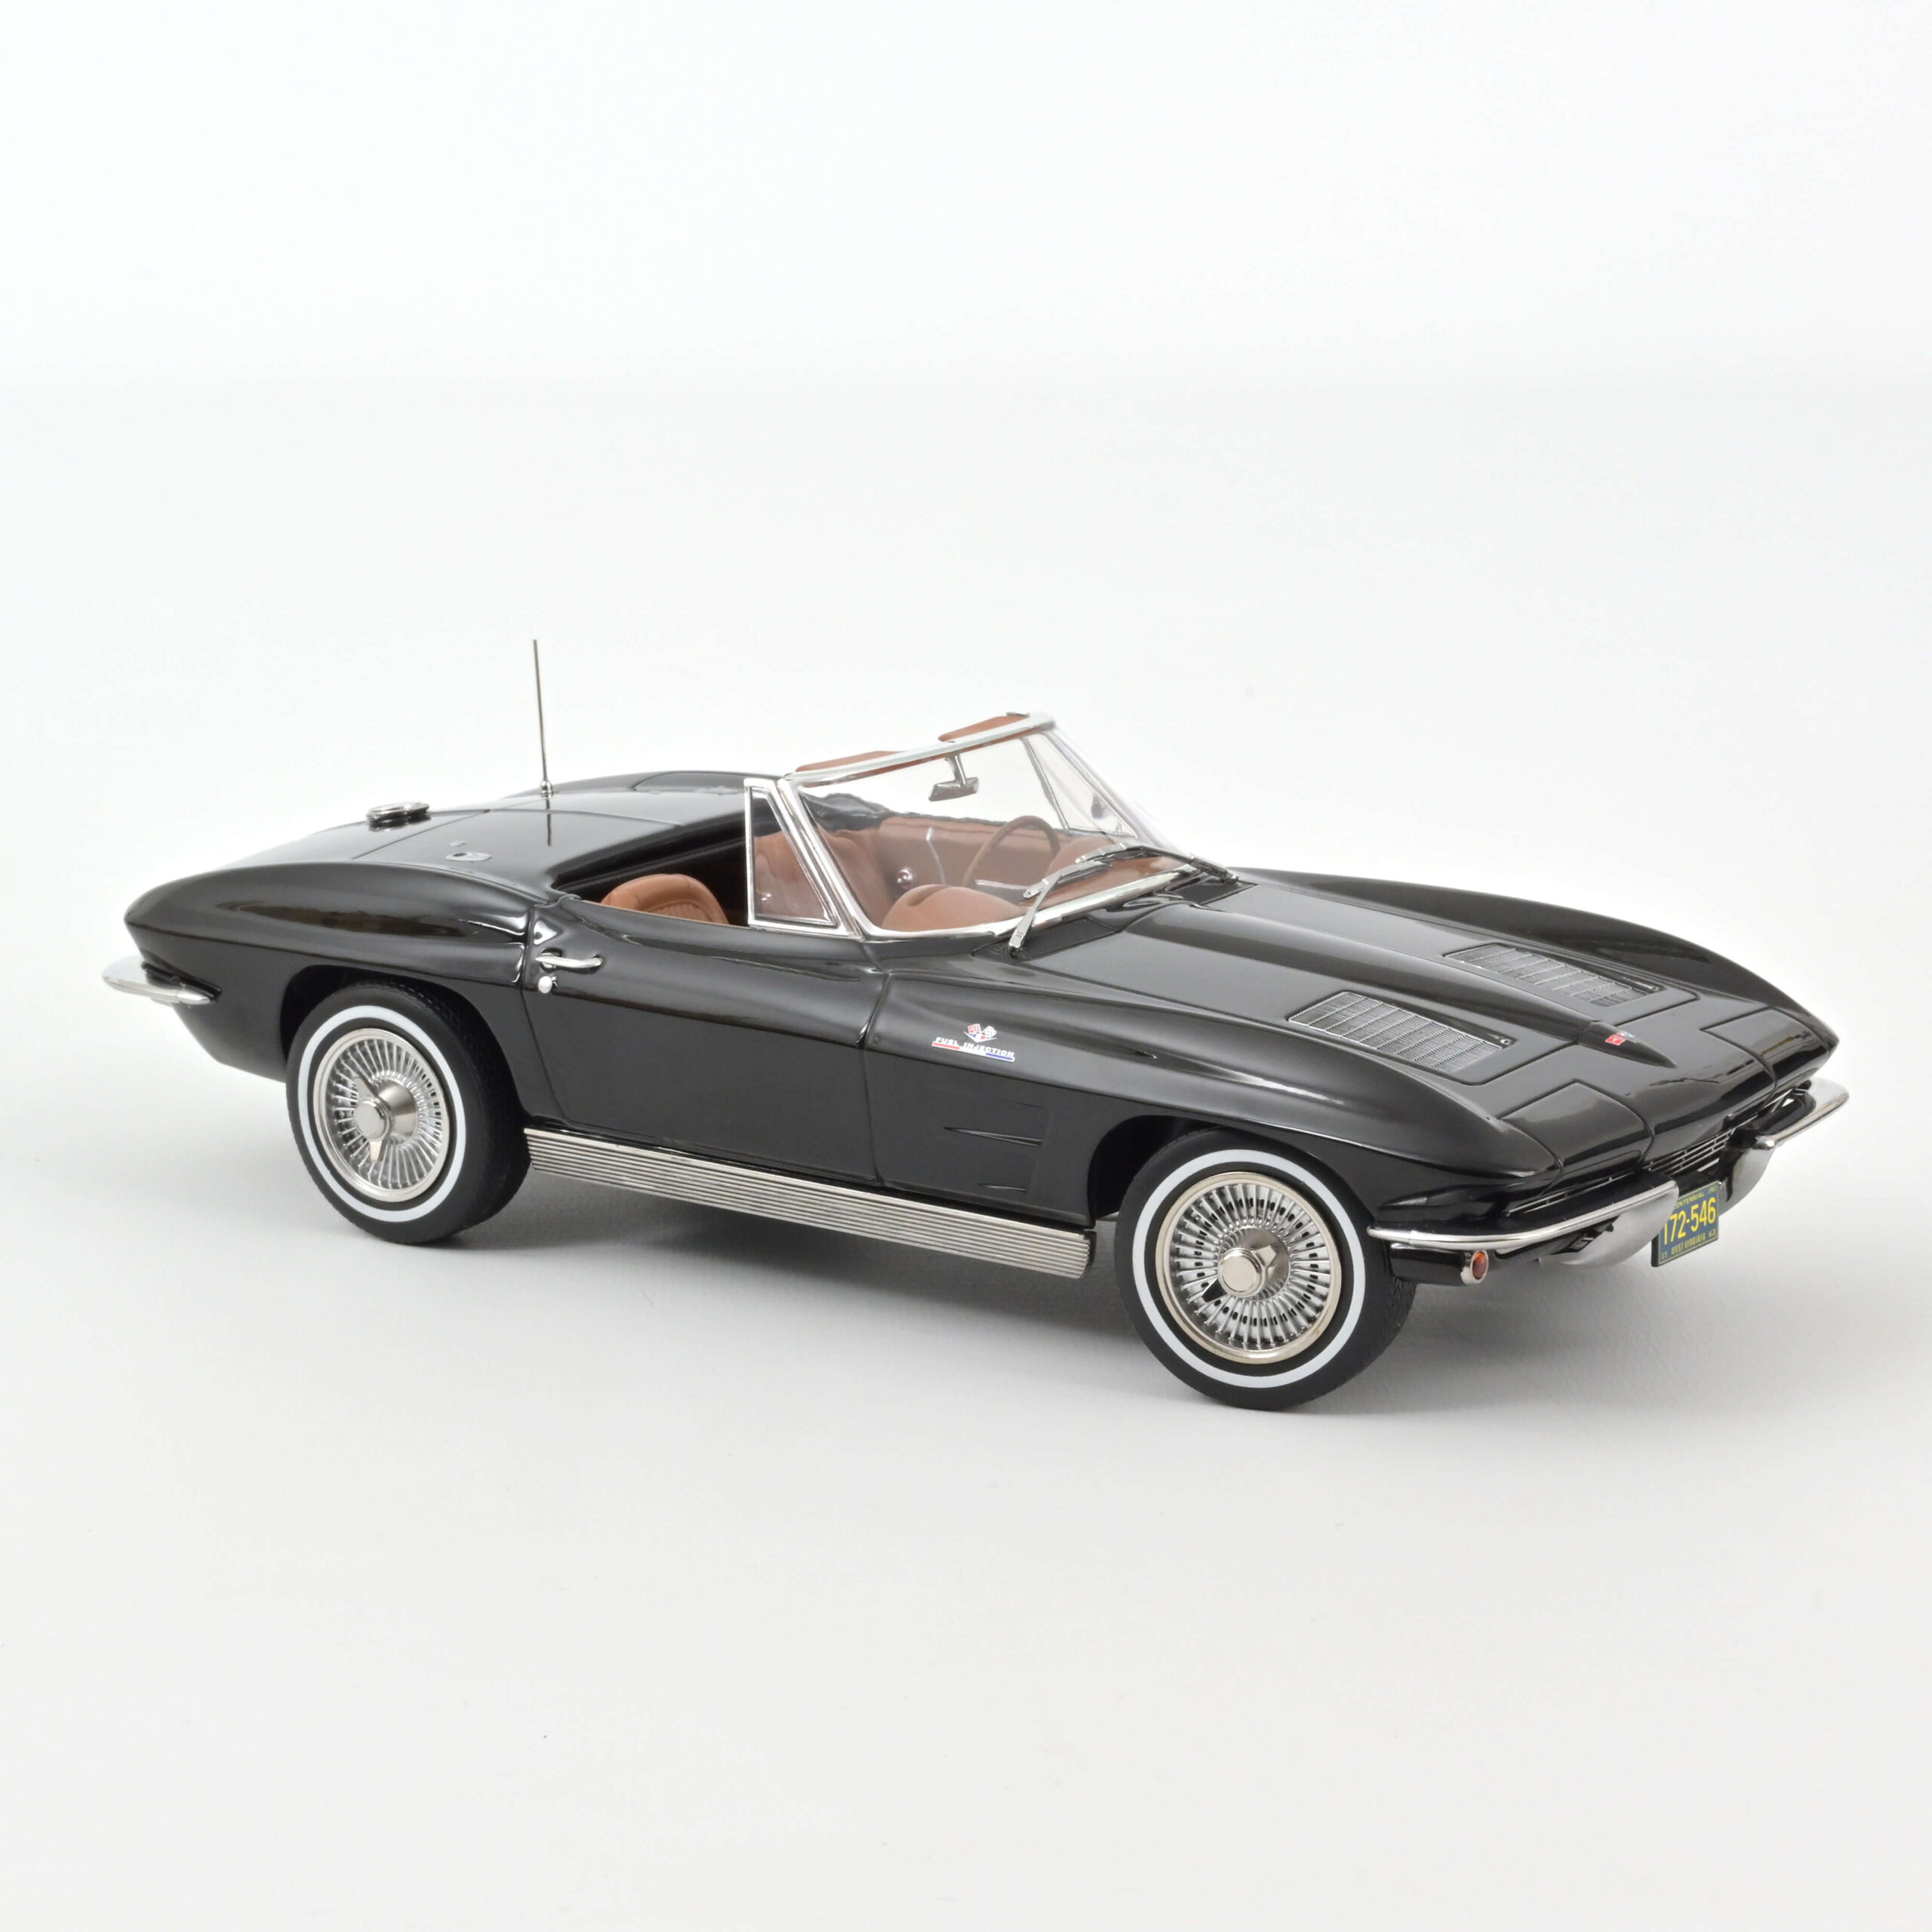 Chevrolet Corvette Sting Ray Cabriolet 1963 – Black